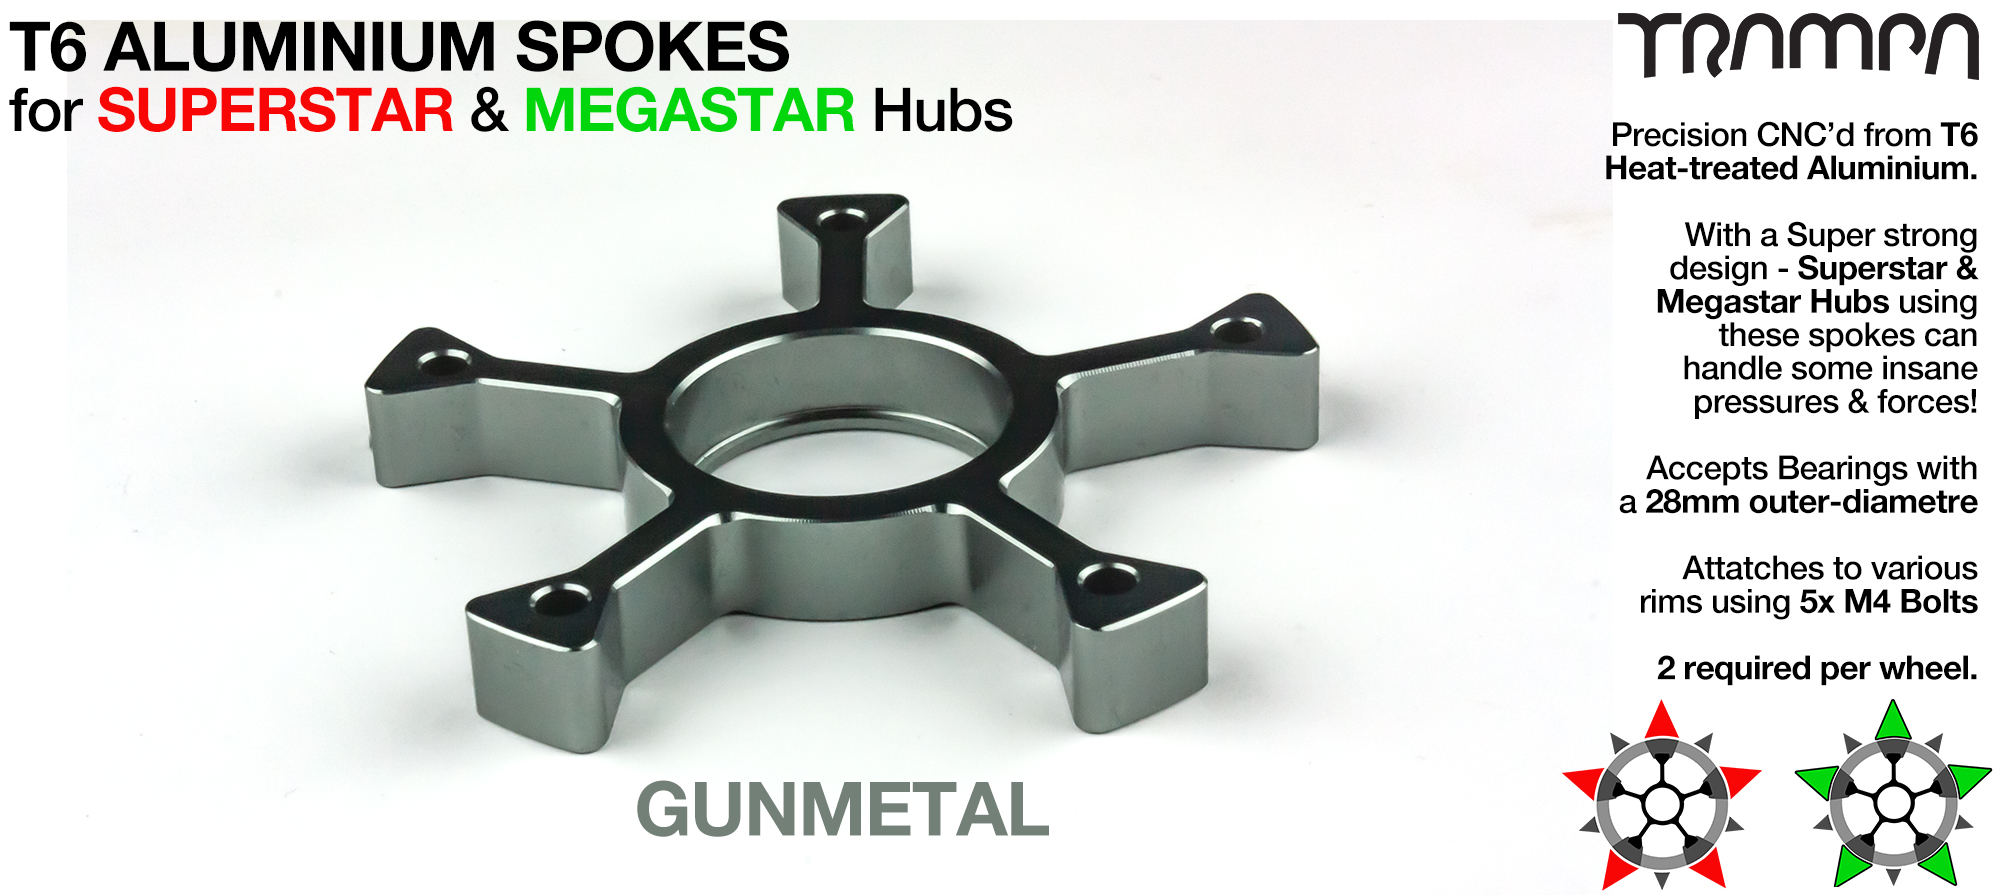 GUNMETAL Anodised Superstar Original Spoke - Extruded T6 Aluminum Heat treated & CNC Precision milled